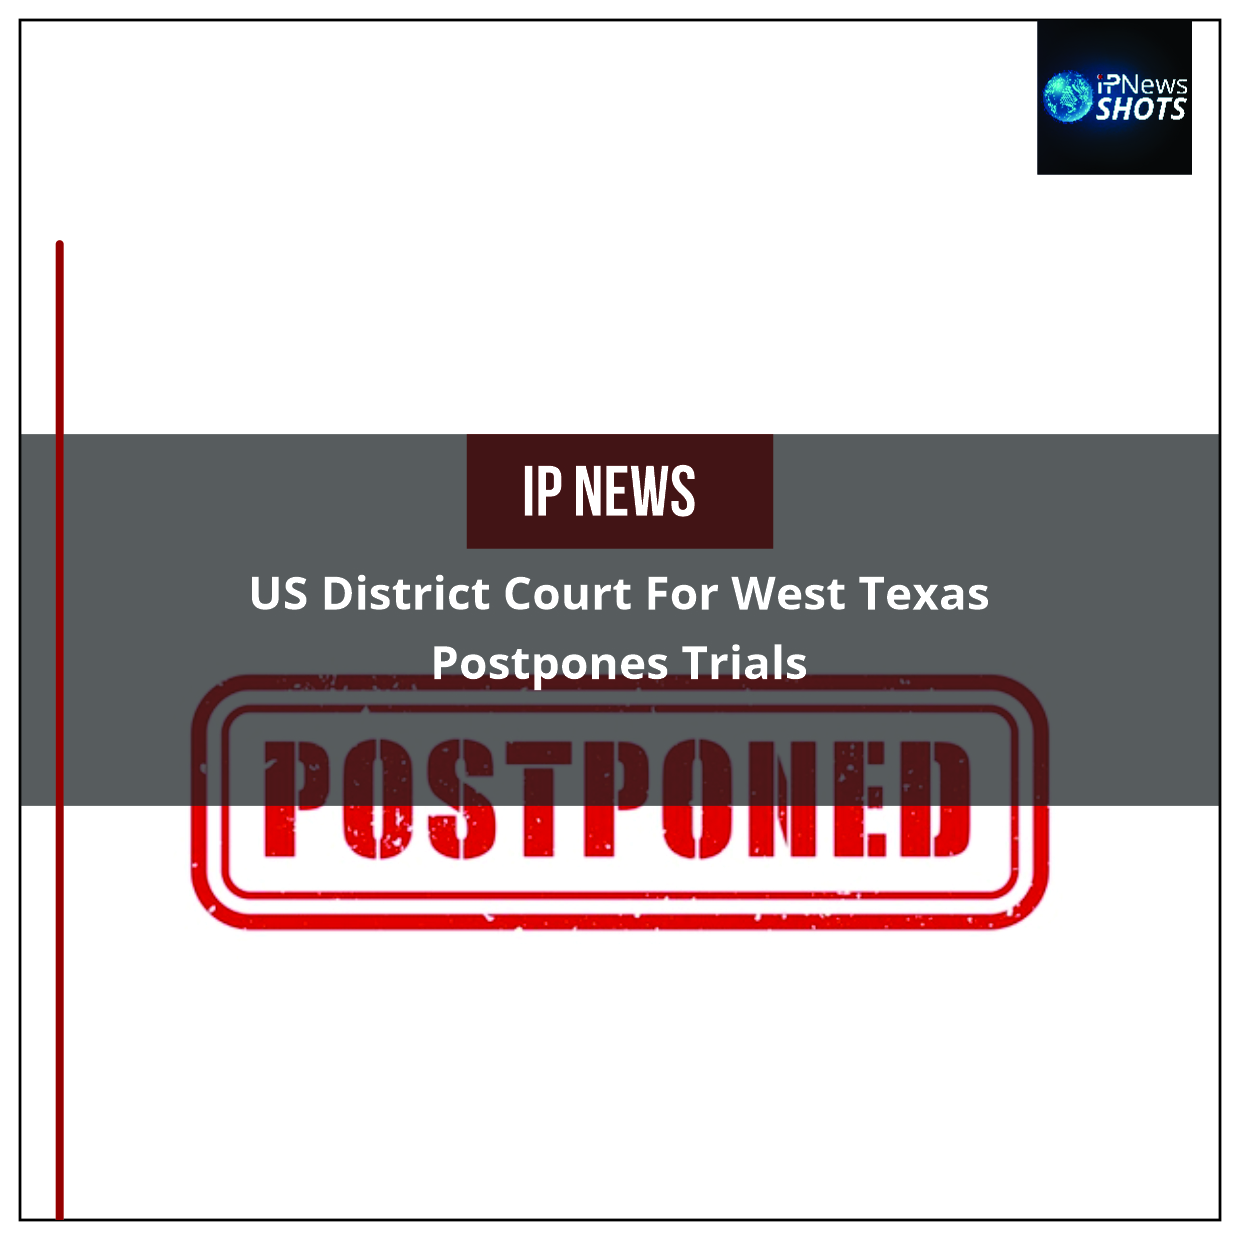 US District Court for West Texas Postpones Trials IP News Shots